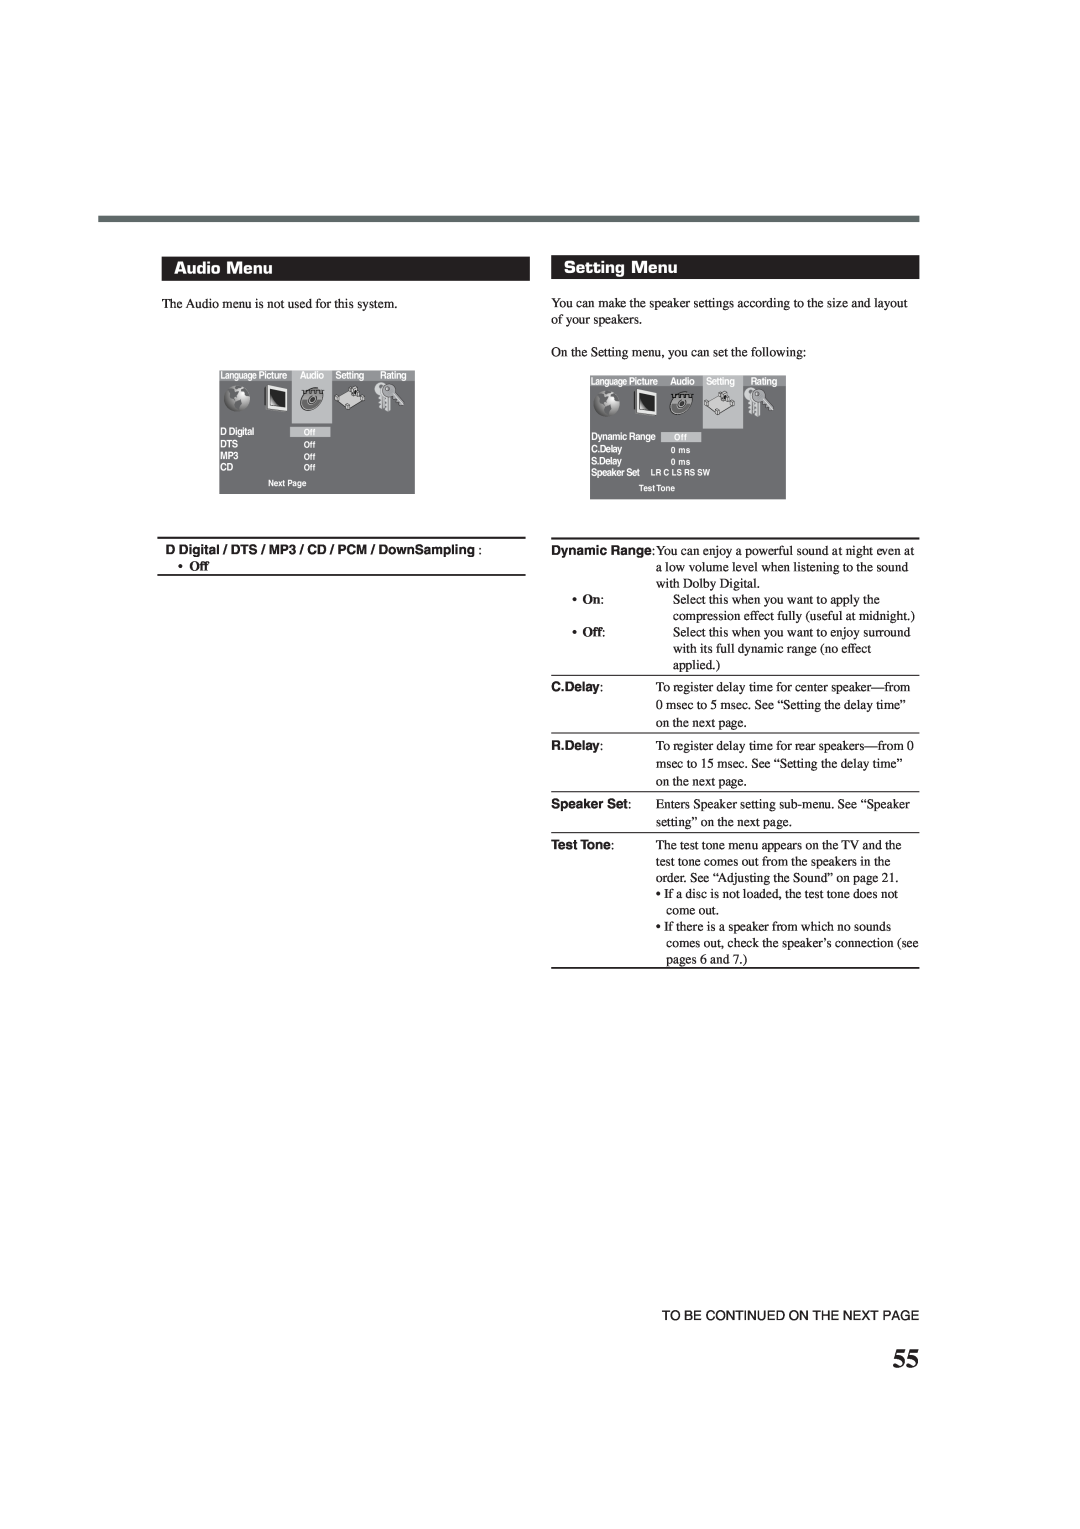 JVC TH-A35 manual Audio Menu, Setting Menu, D Digital / DTS / MP3 / CD / PCM / DownSampling 